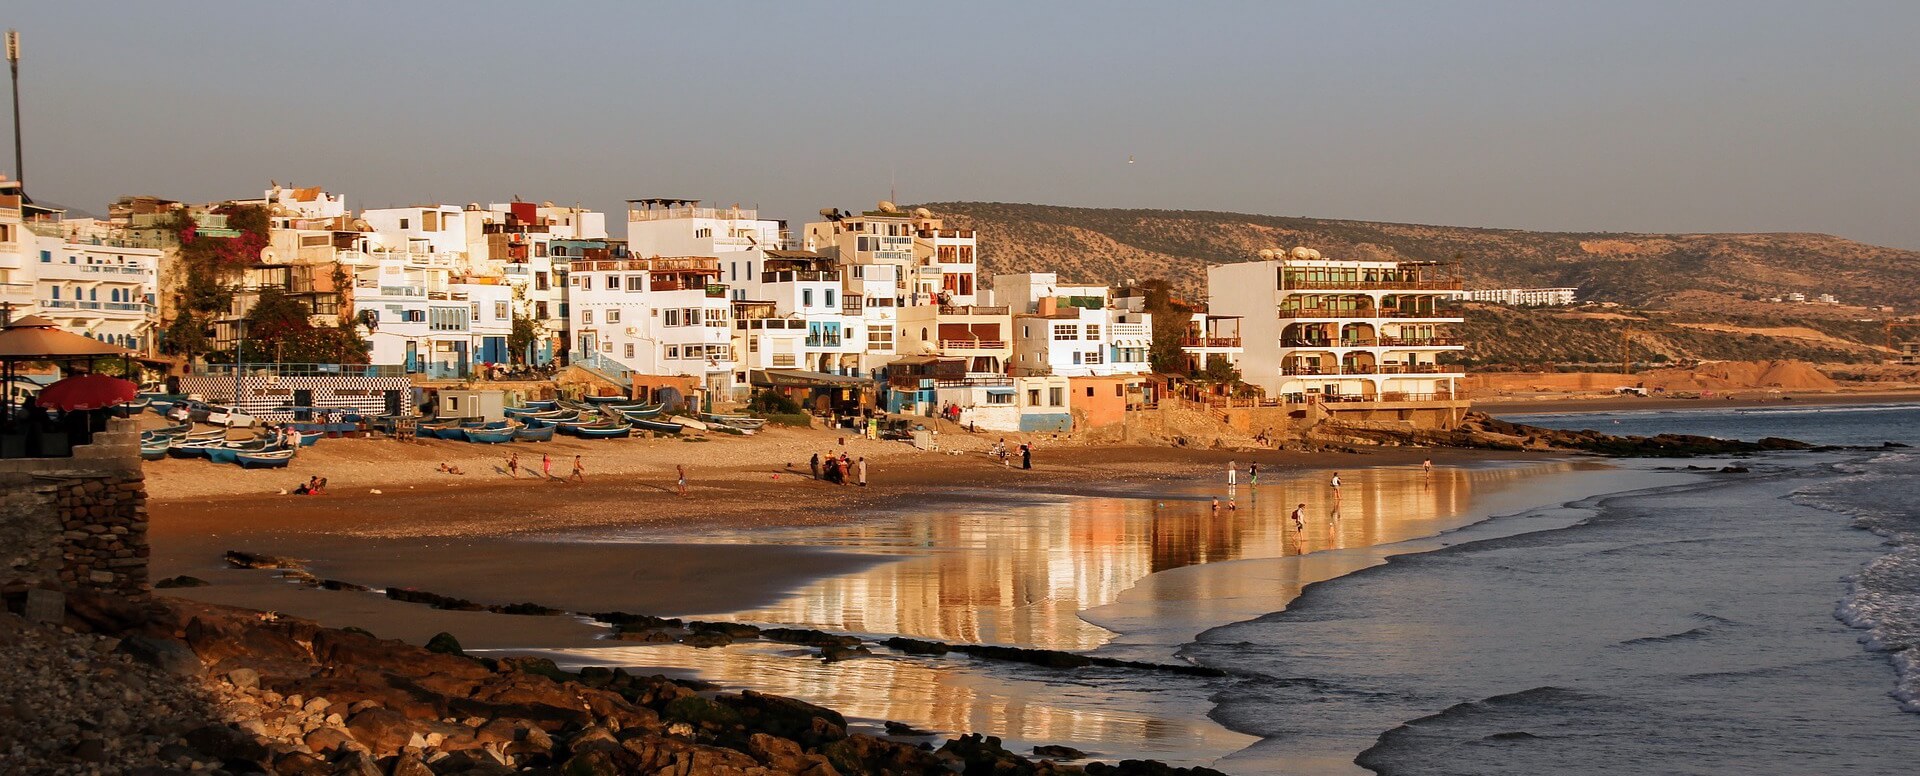 8. Witness the beauty of the coastline - Morocco